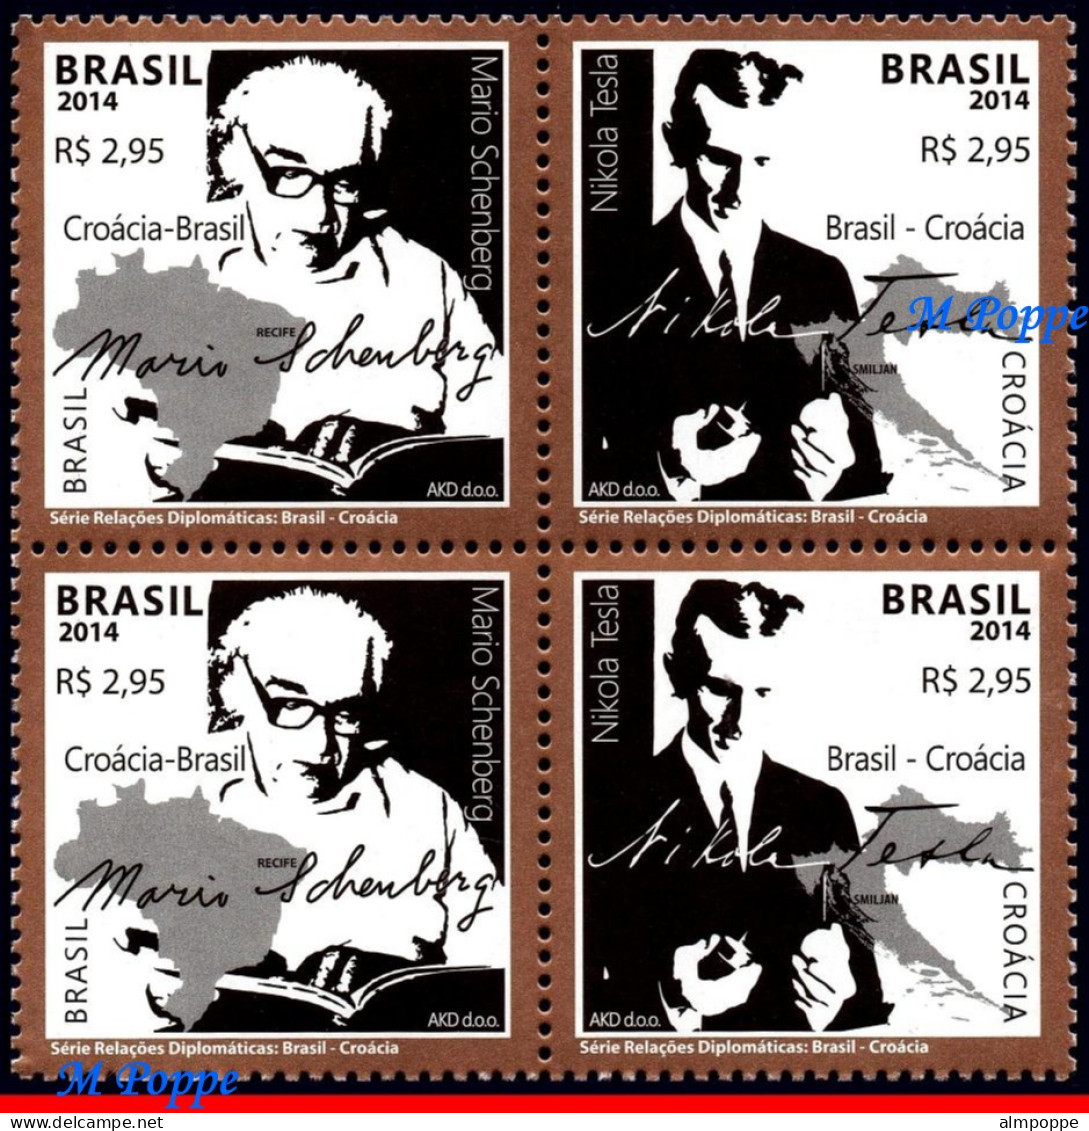 Ref. BR-3286-Q BRAZIL 2014 - RELATIONSHIP WITH CROATIA, M�RIO SCHENBERG & NIKOLA TESLA, MNH, FAMOUS PEOPLE 4V Sc# 3286 - Blocs-feuillets